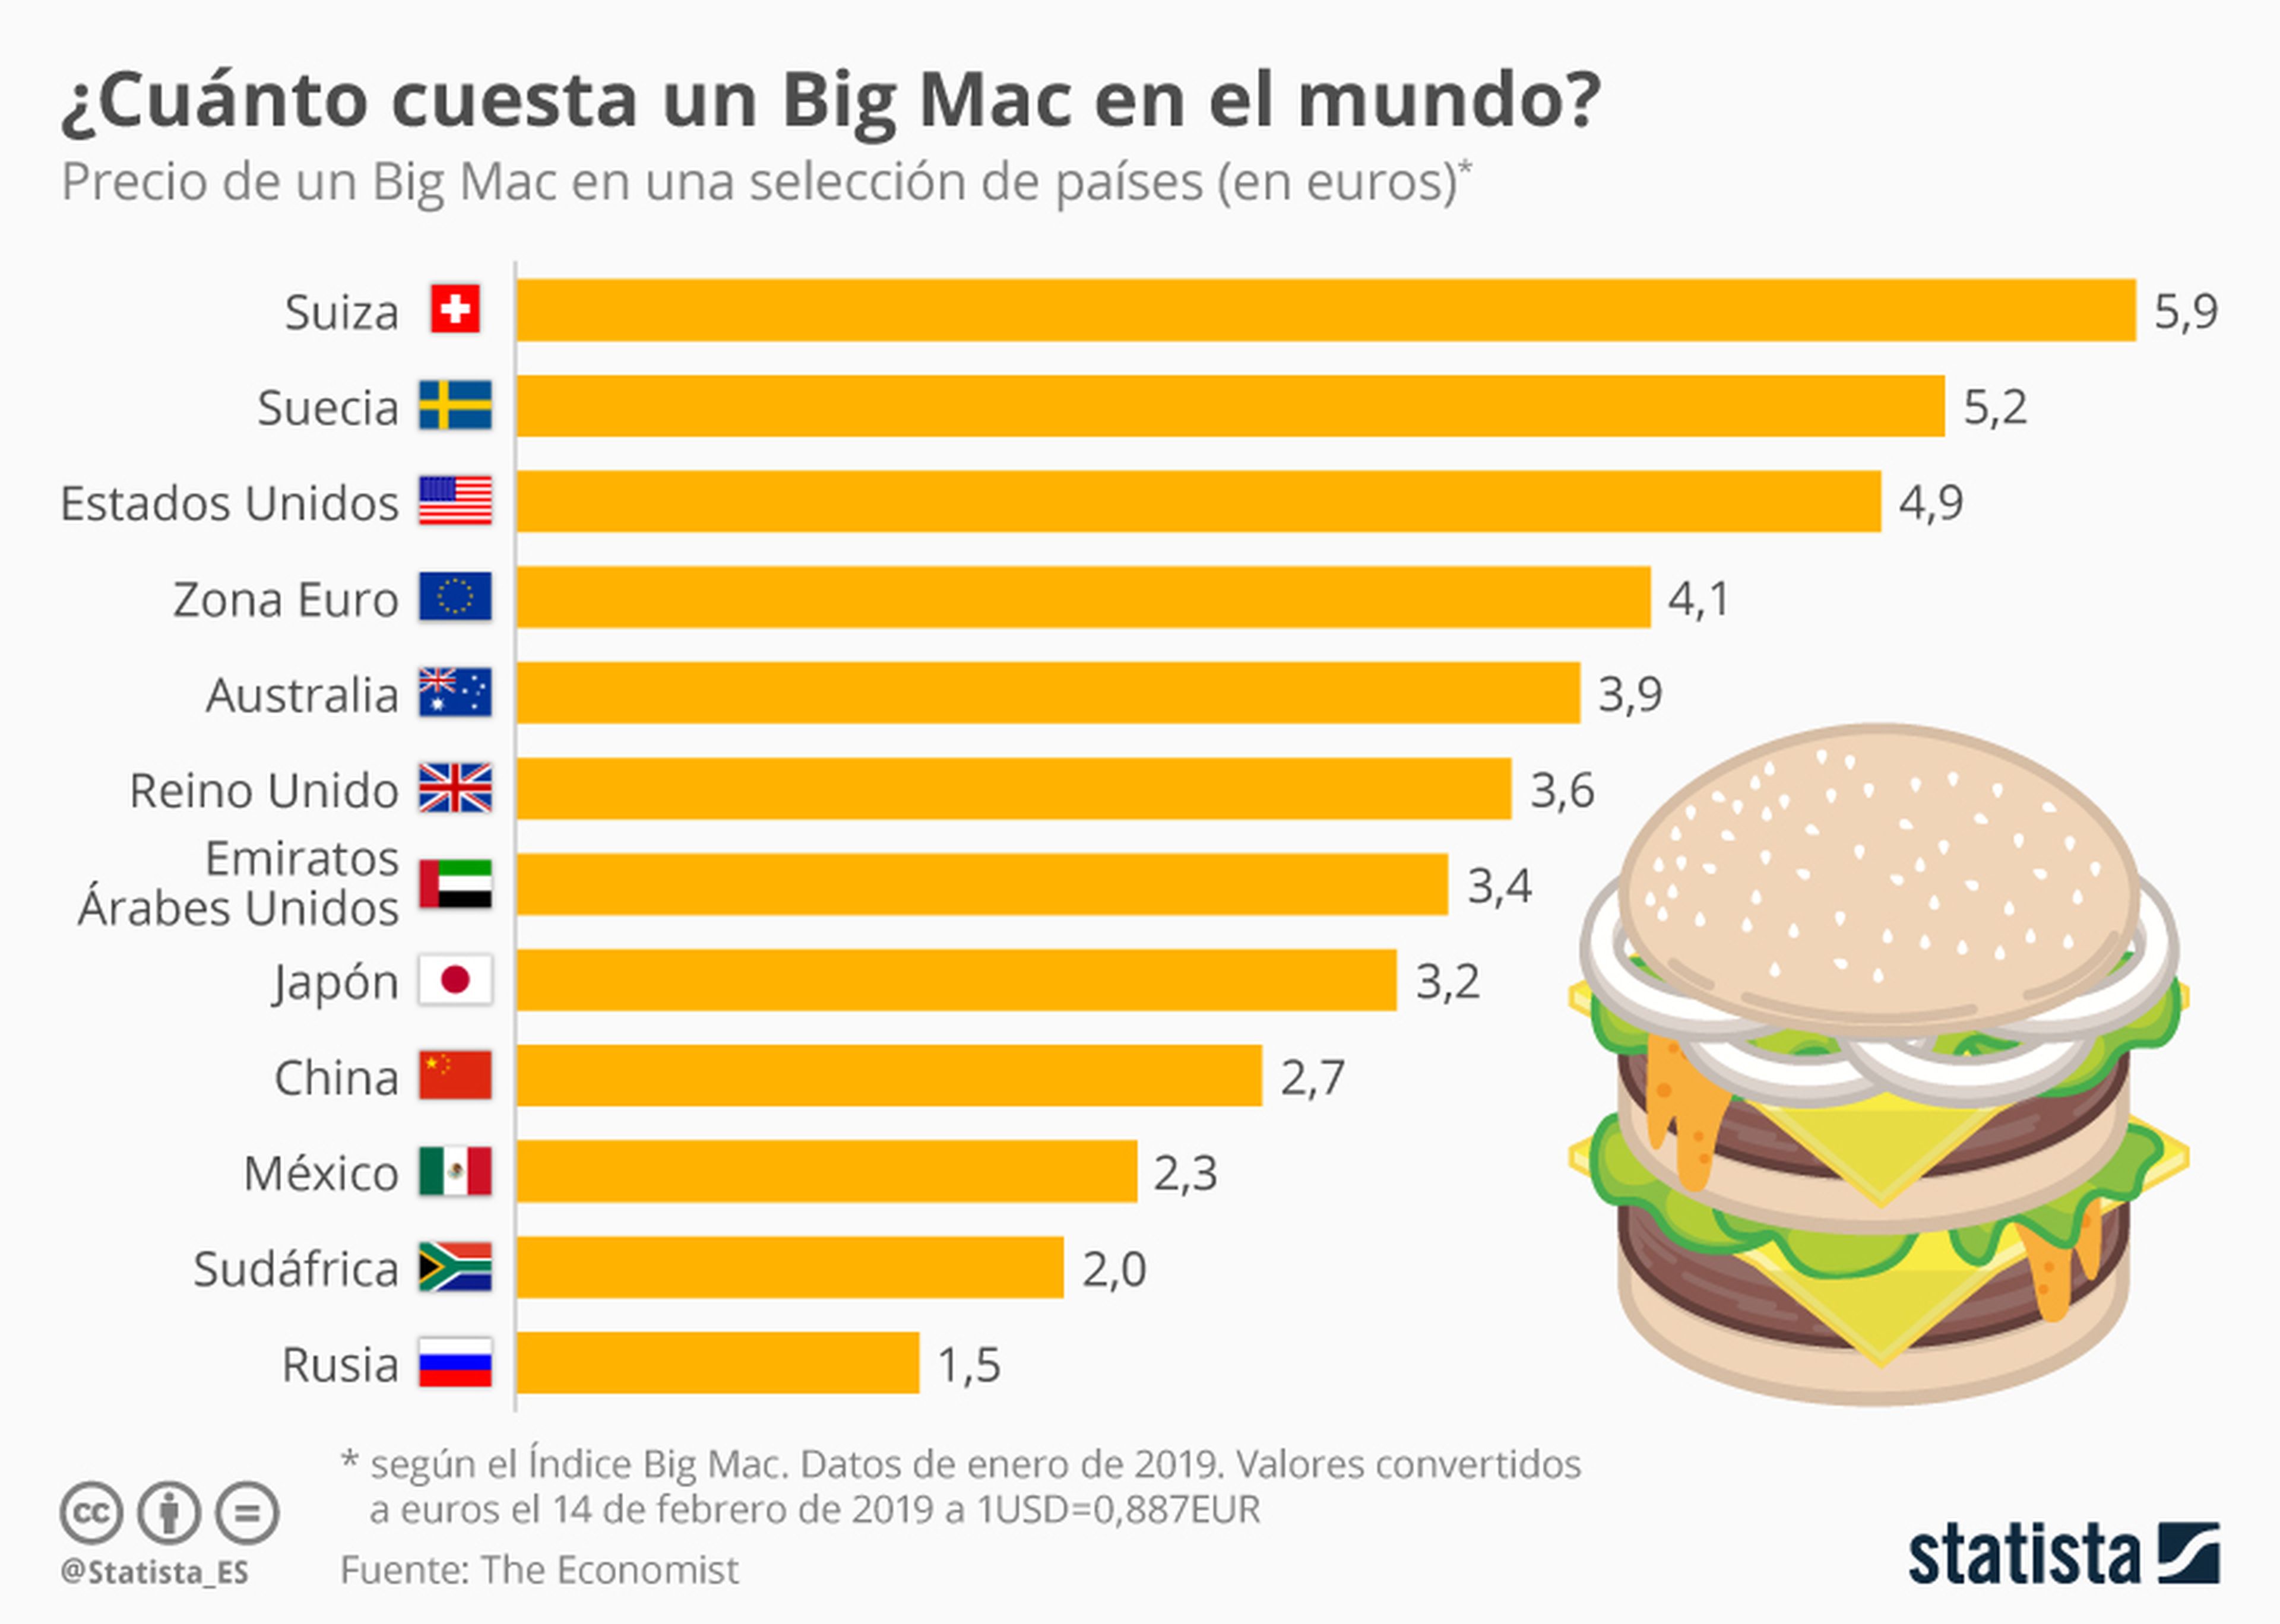 Índice Big Mac